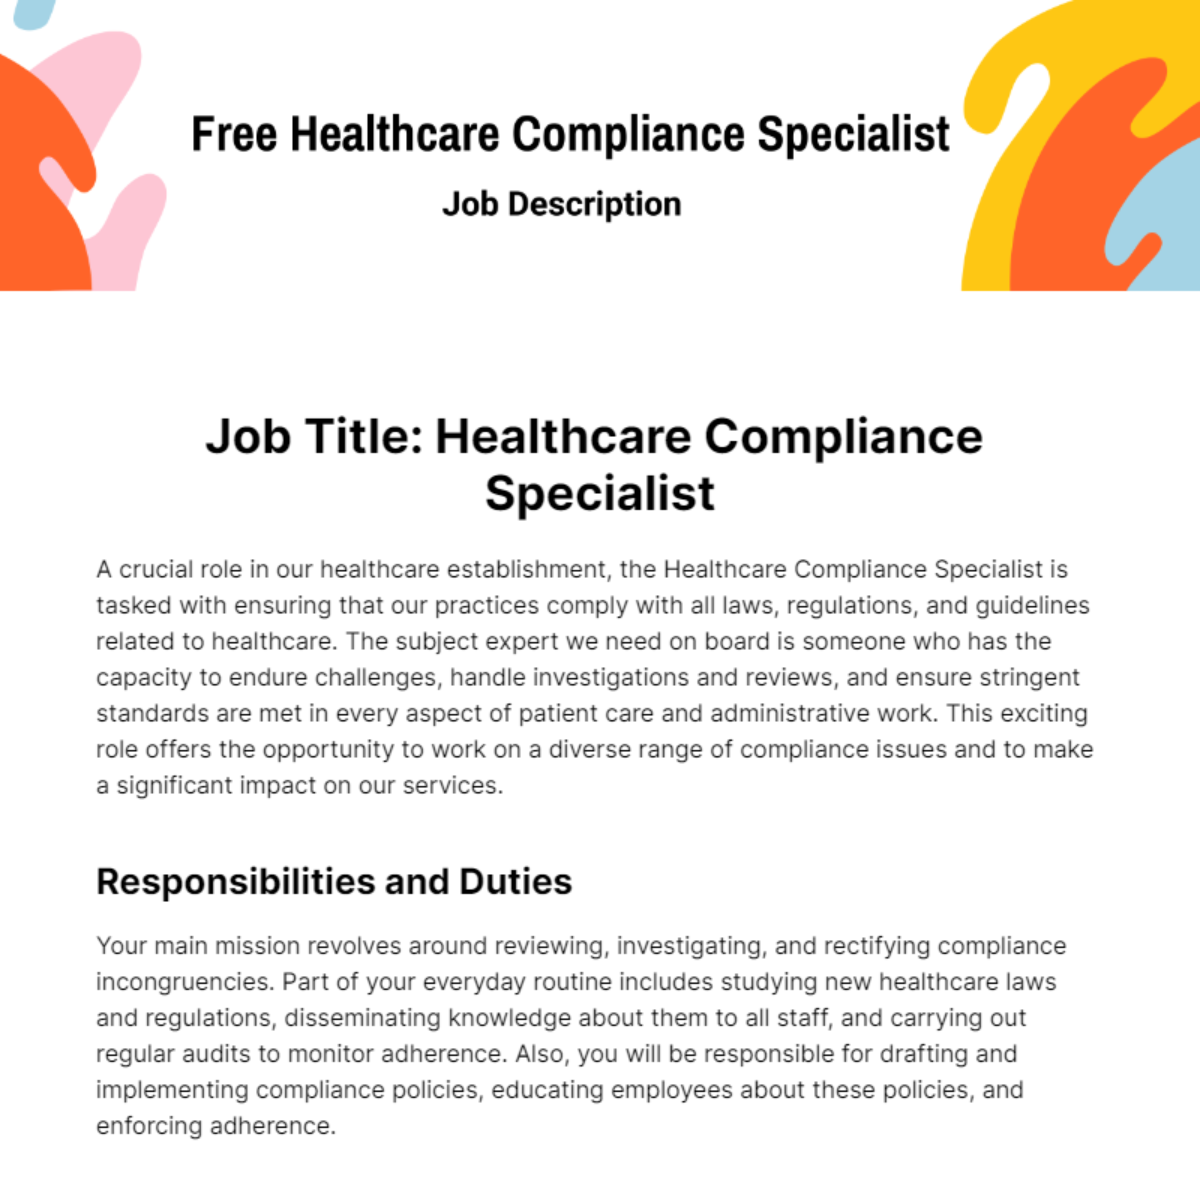 Free Healthcare Compliance Specialist Job Description Template